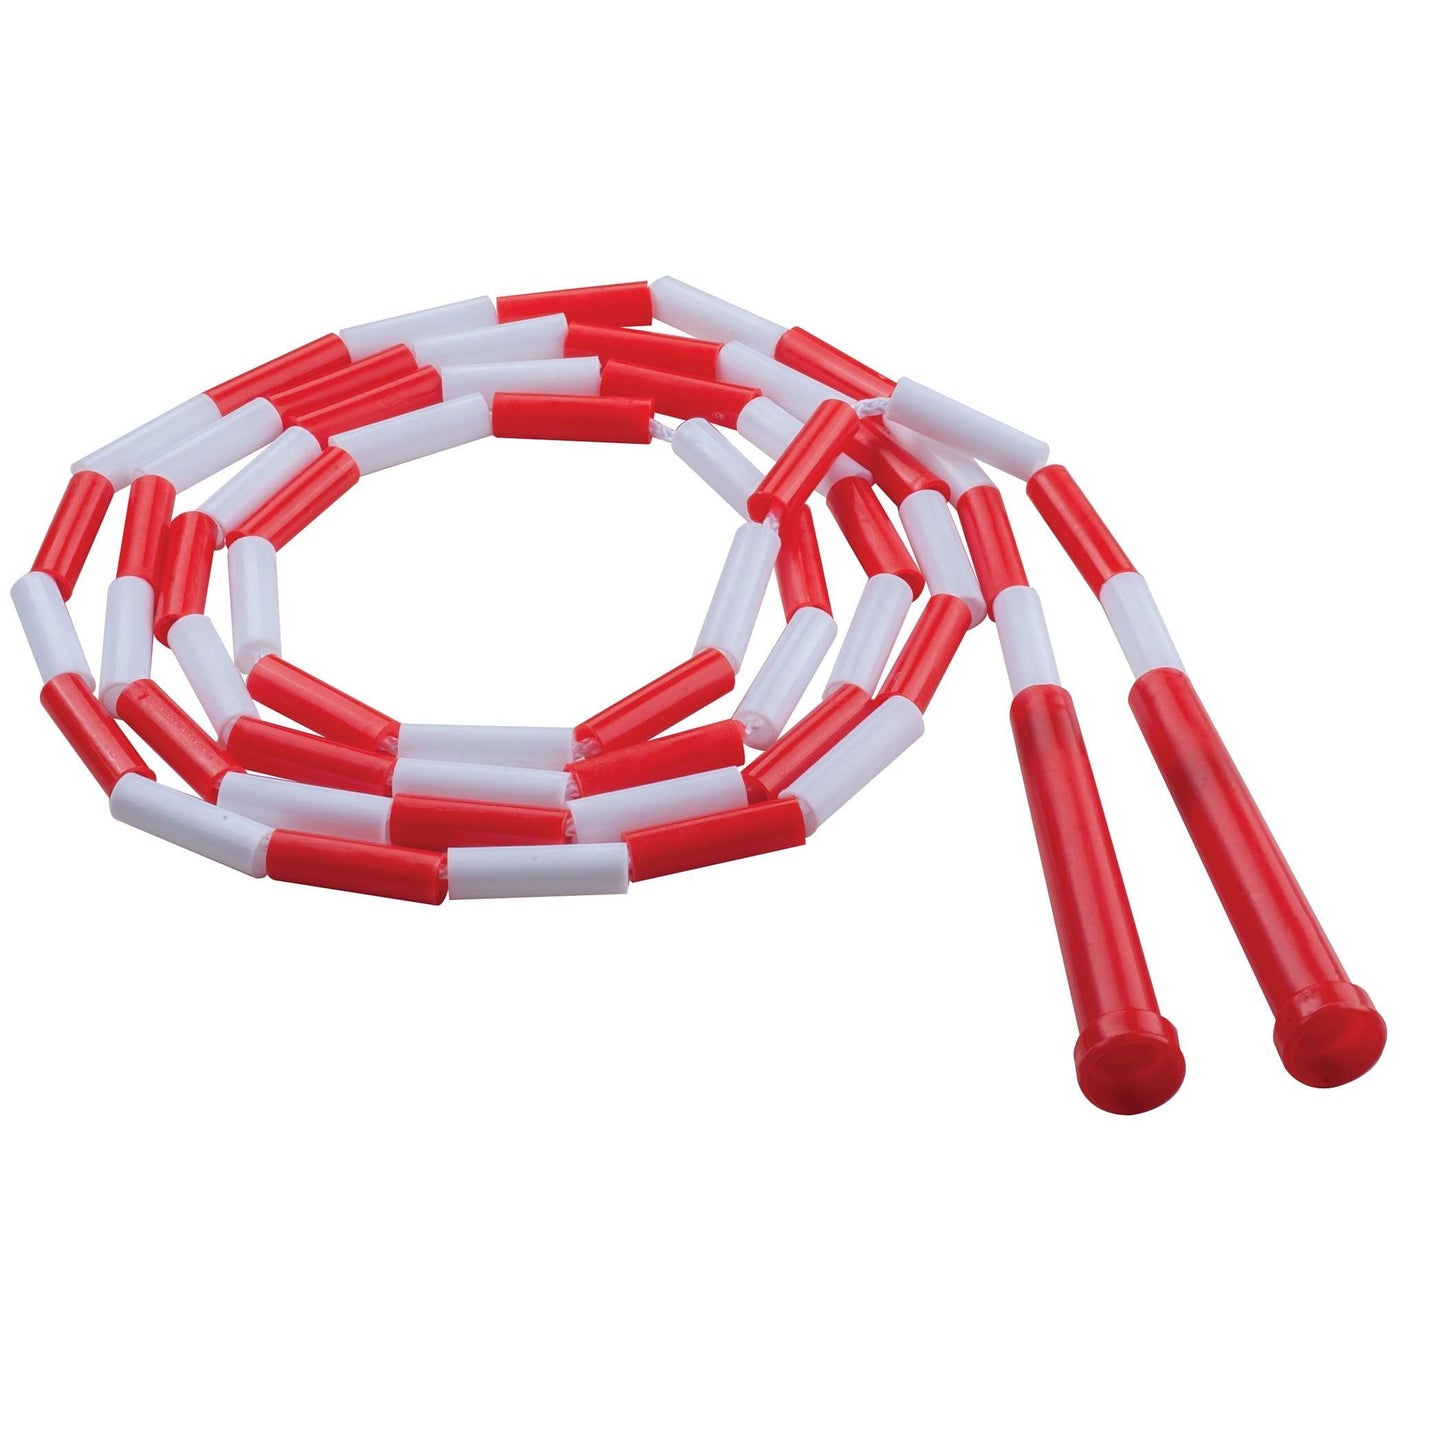 Plastic Segmented Jump Rope 7', Red & White, Pack of 12 - Loomini